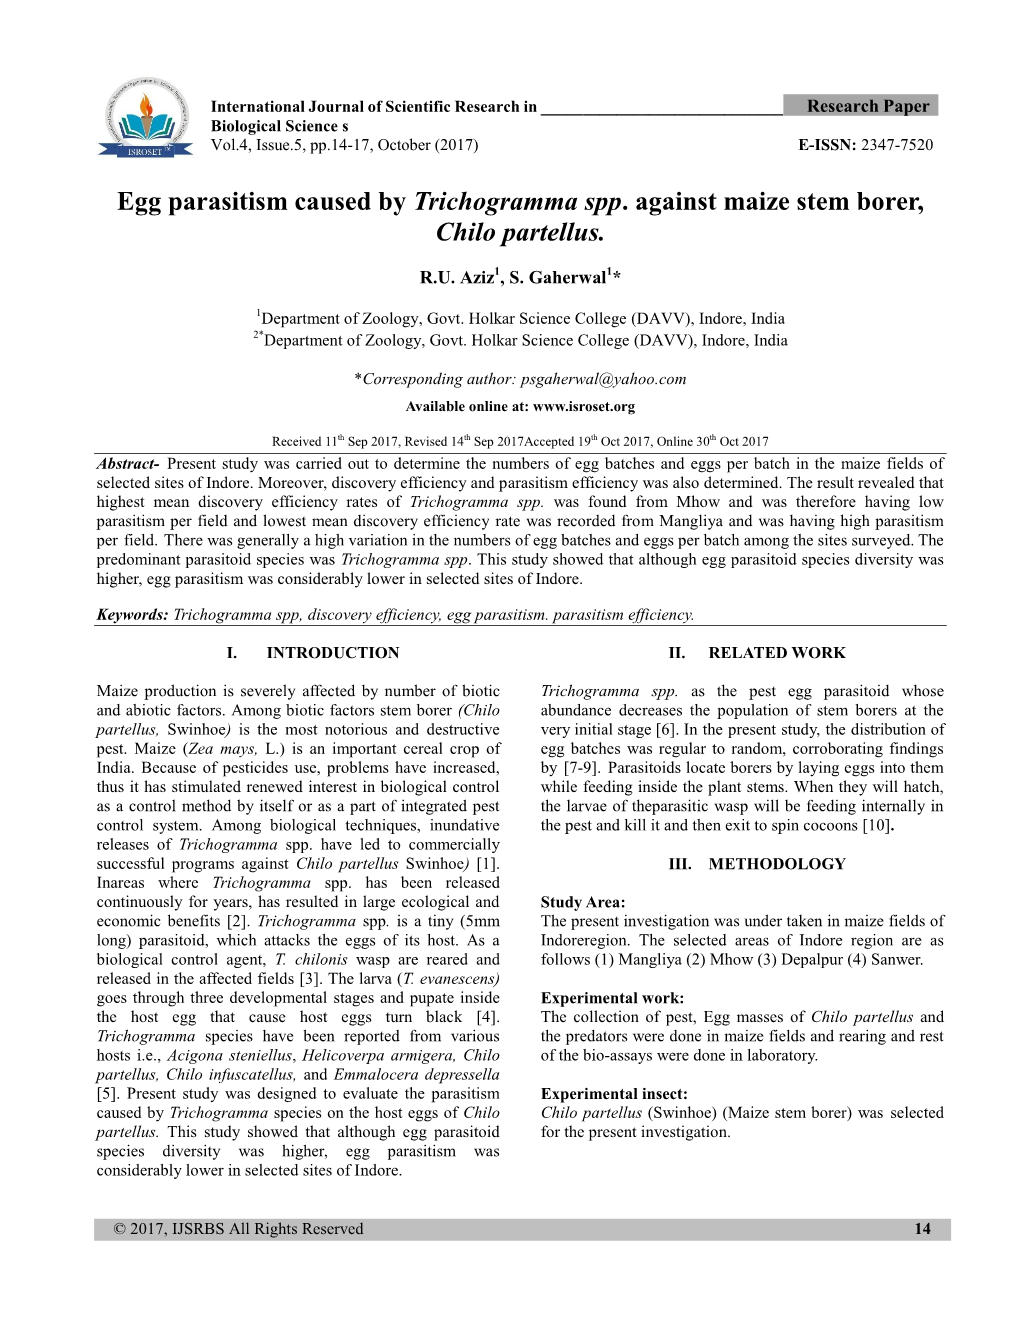 Egg Parasitism Caused by Trichogramma Spp. Against Maize Stem Borer, Chilo Partellus